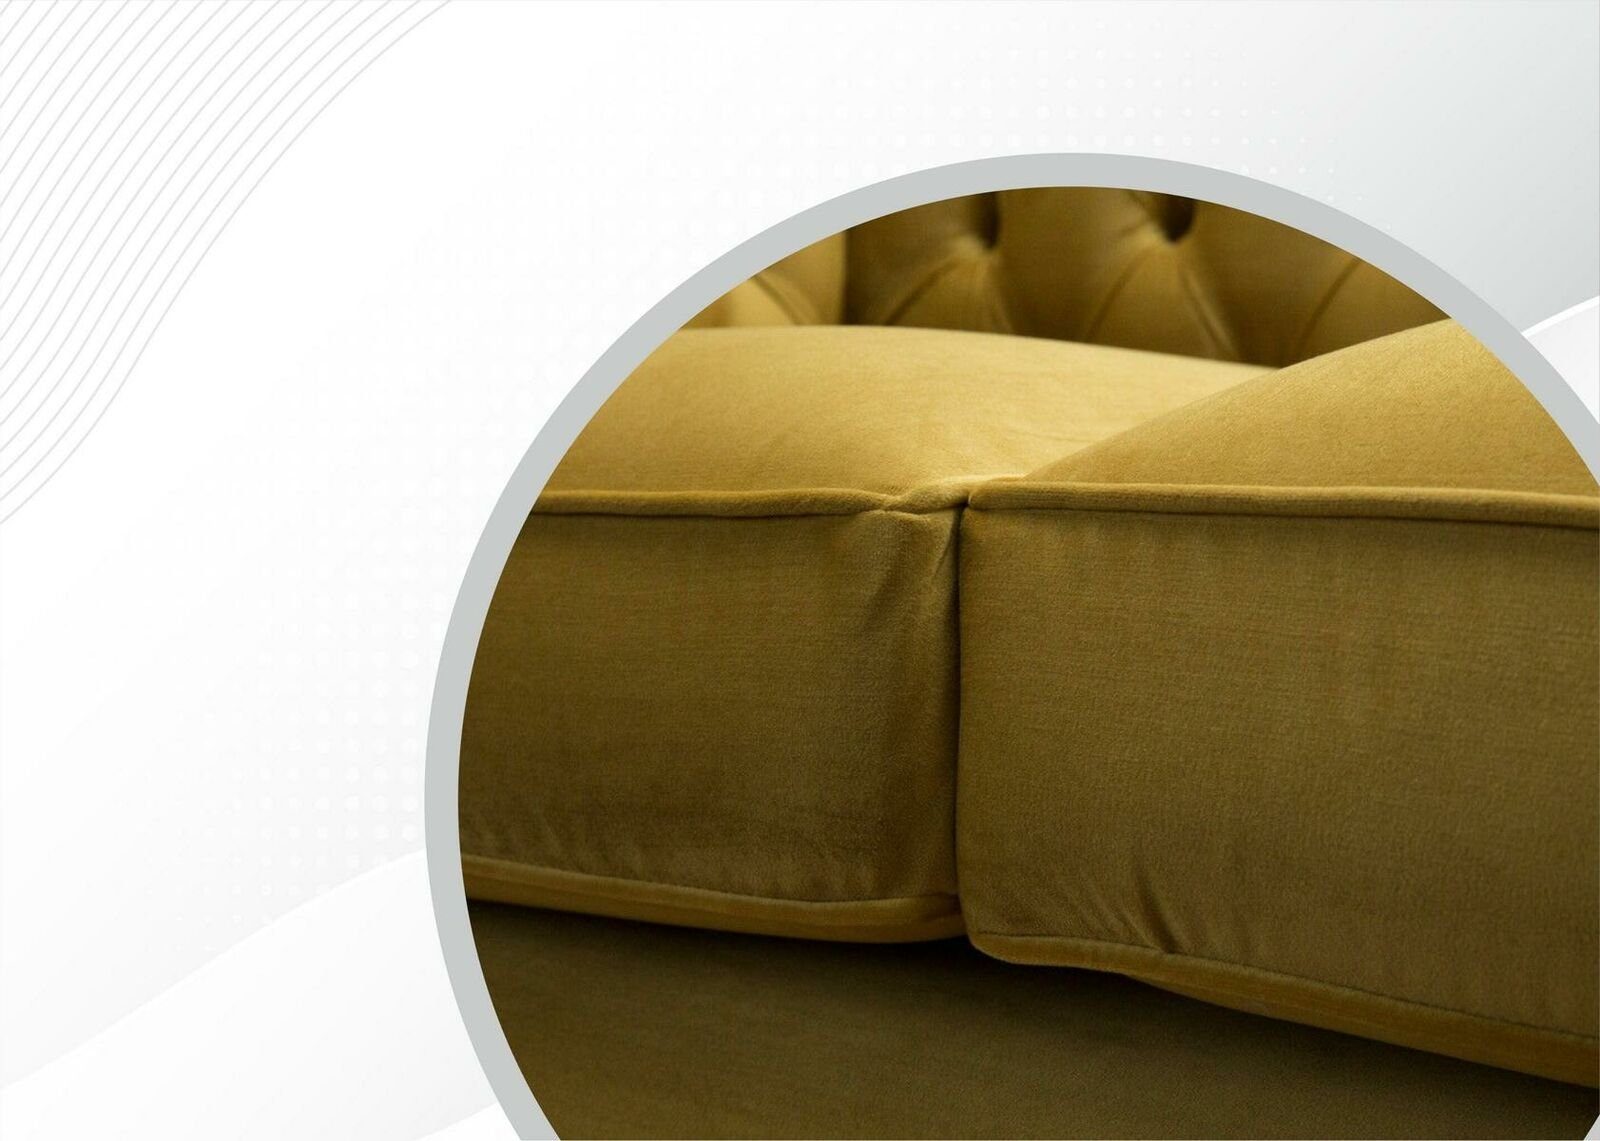 moderne JVmoebel Made in Chesterfield Europe Relax Sofa Gelber Neu, 2-Sitzer Couch